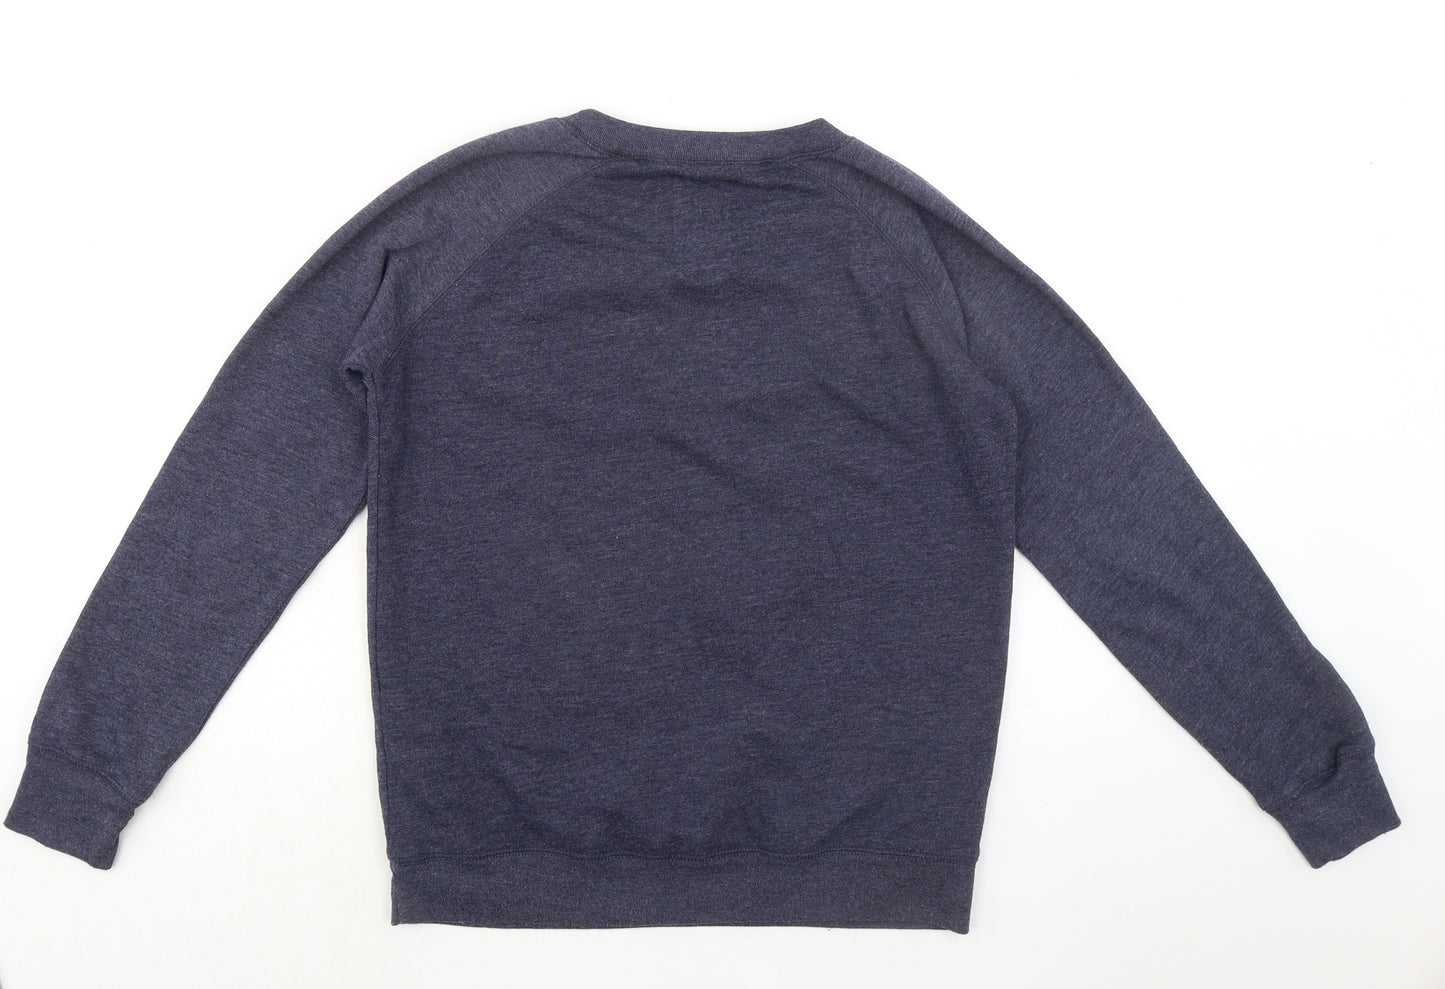 Triblend Sweats Mens Blue Cotton Pullover Sweatshirt Size M